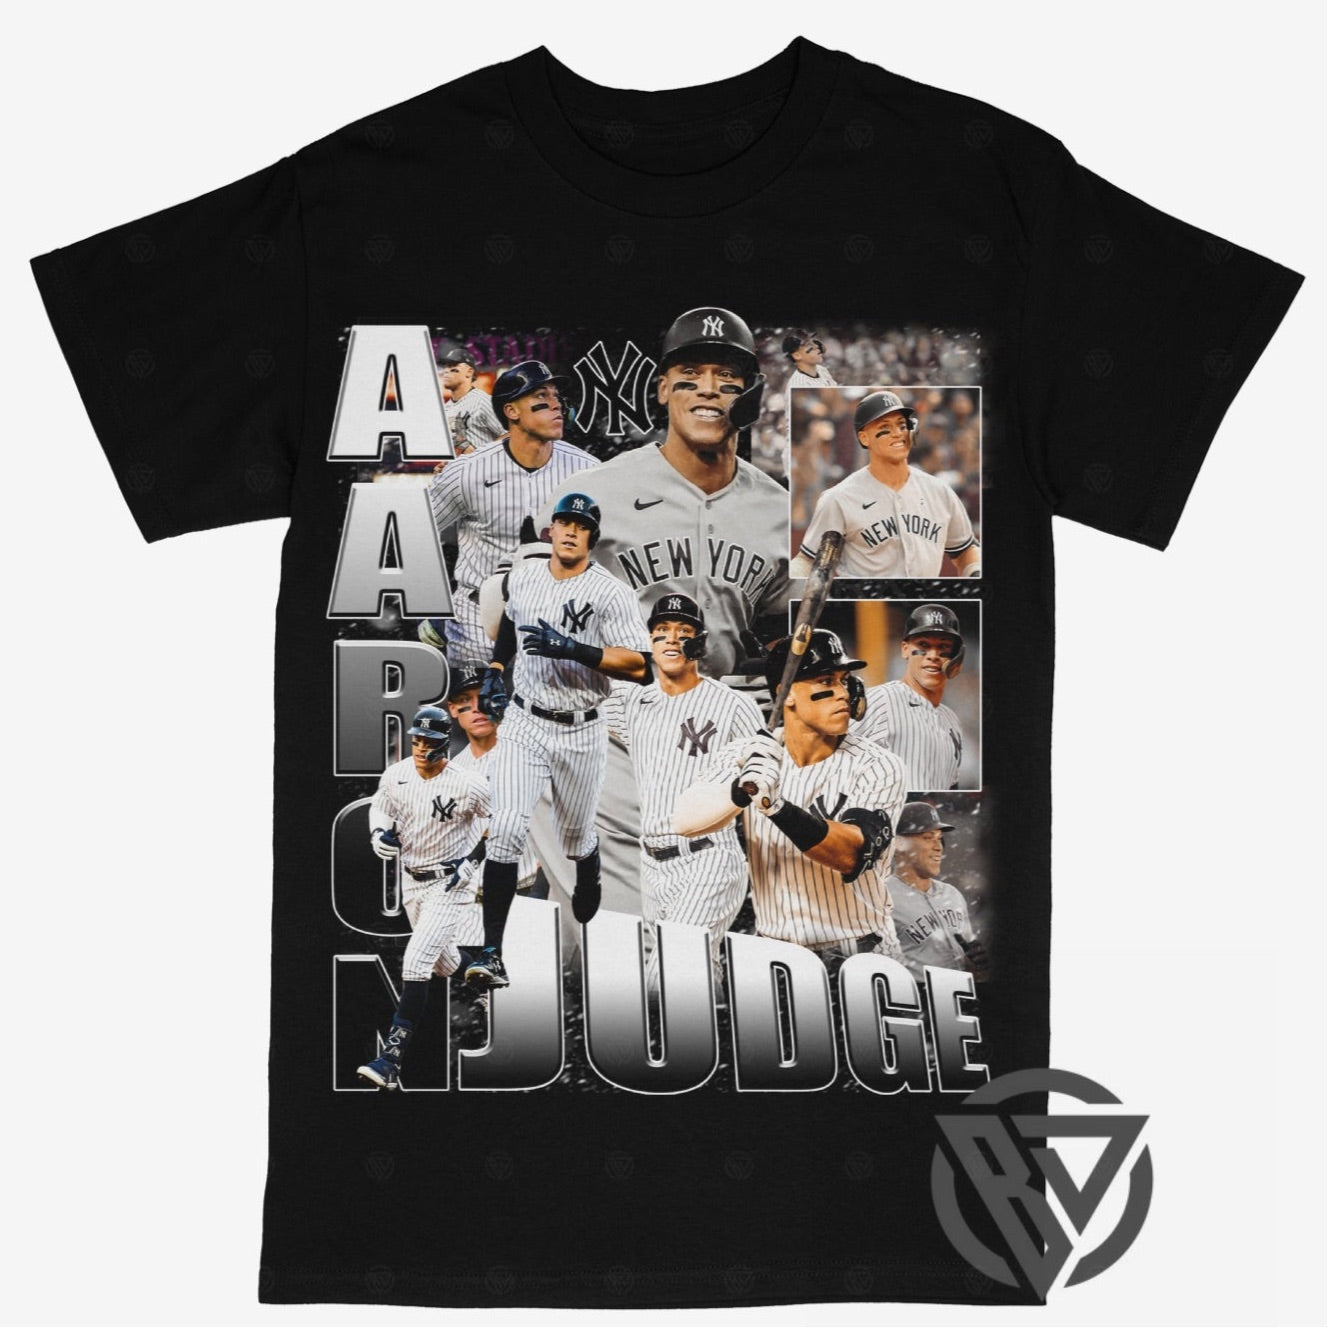  Aaron Judge Number Portrait Baj New York MLBPA T-Shirt